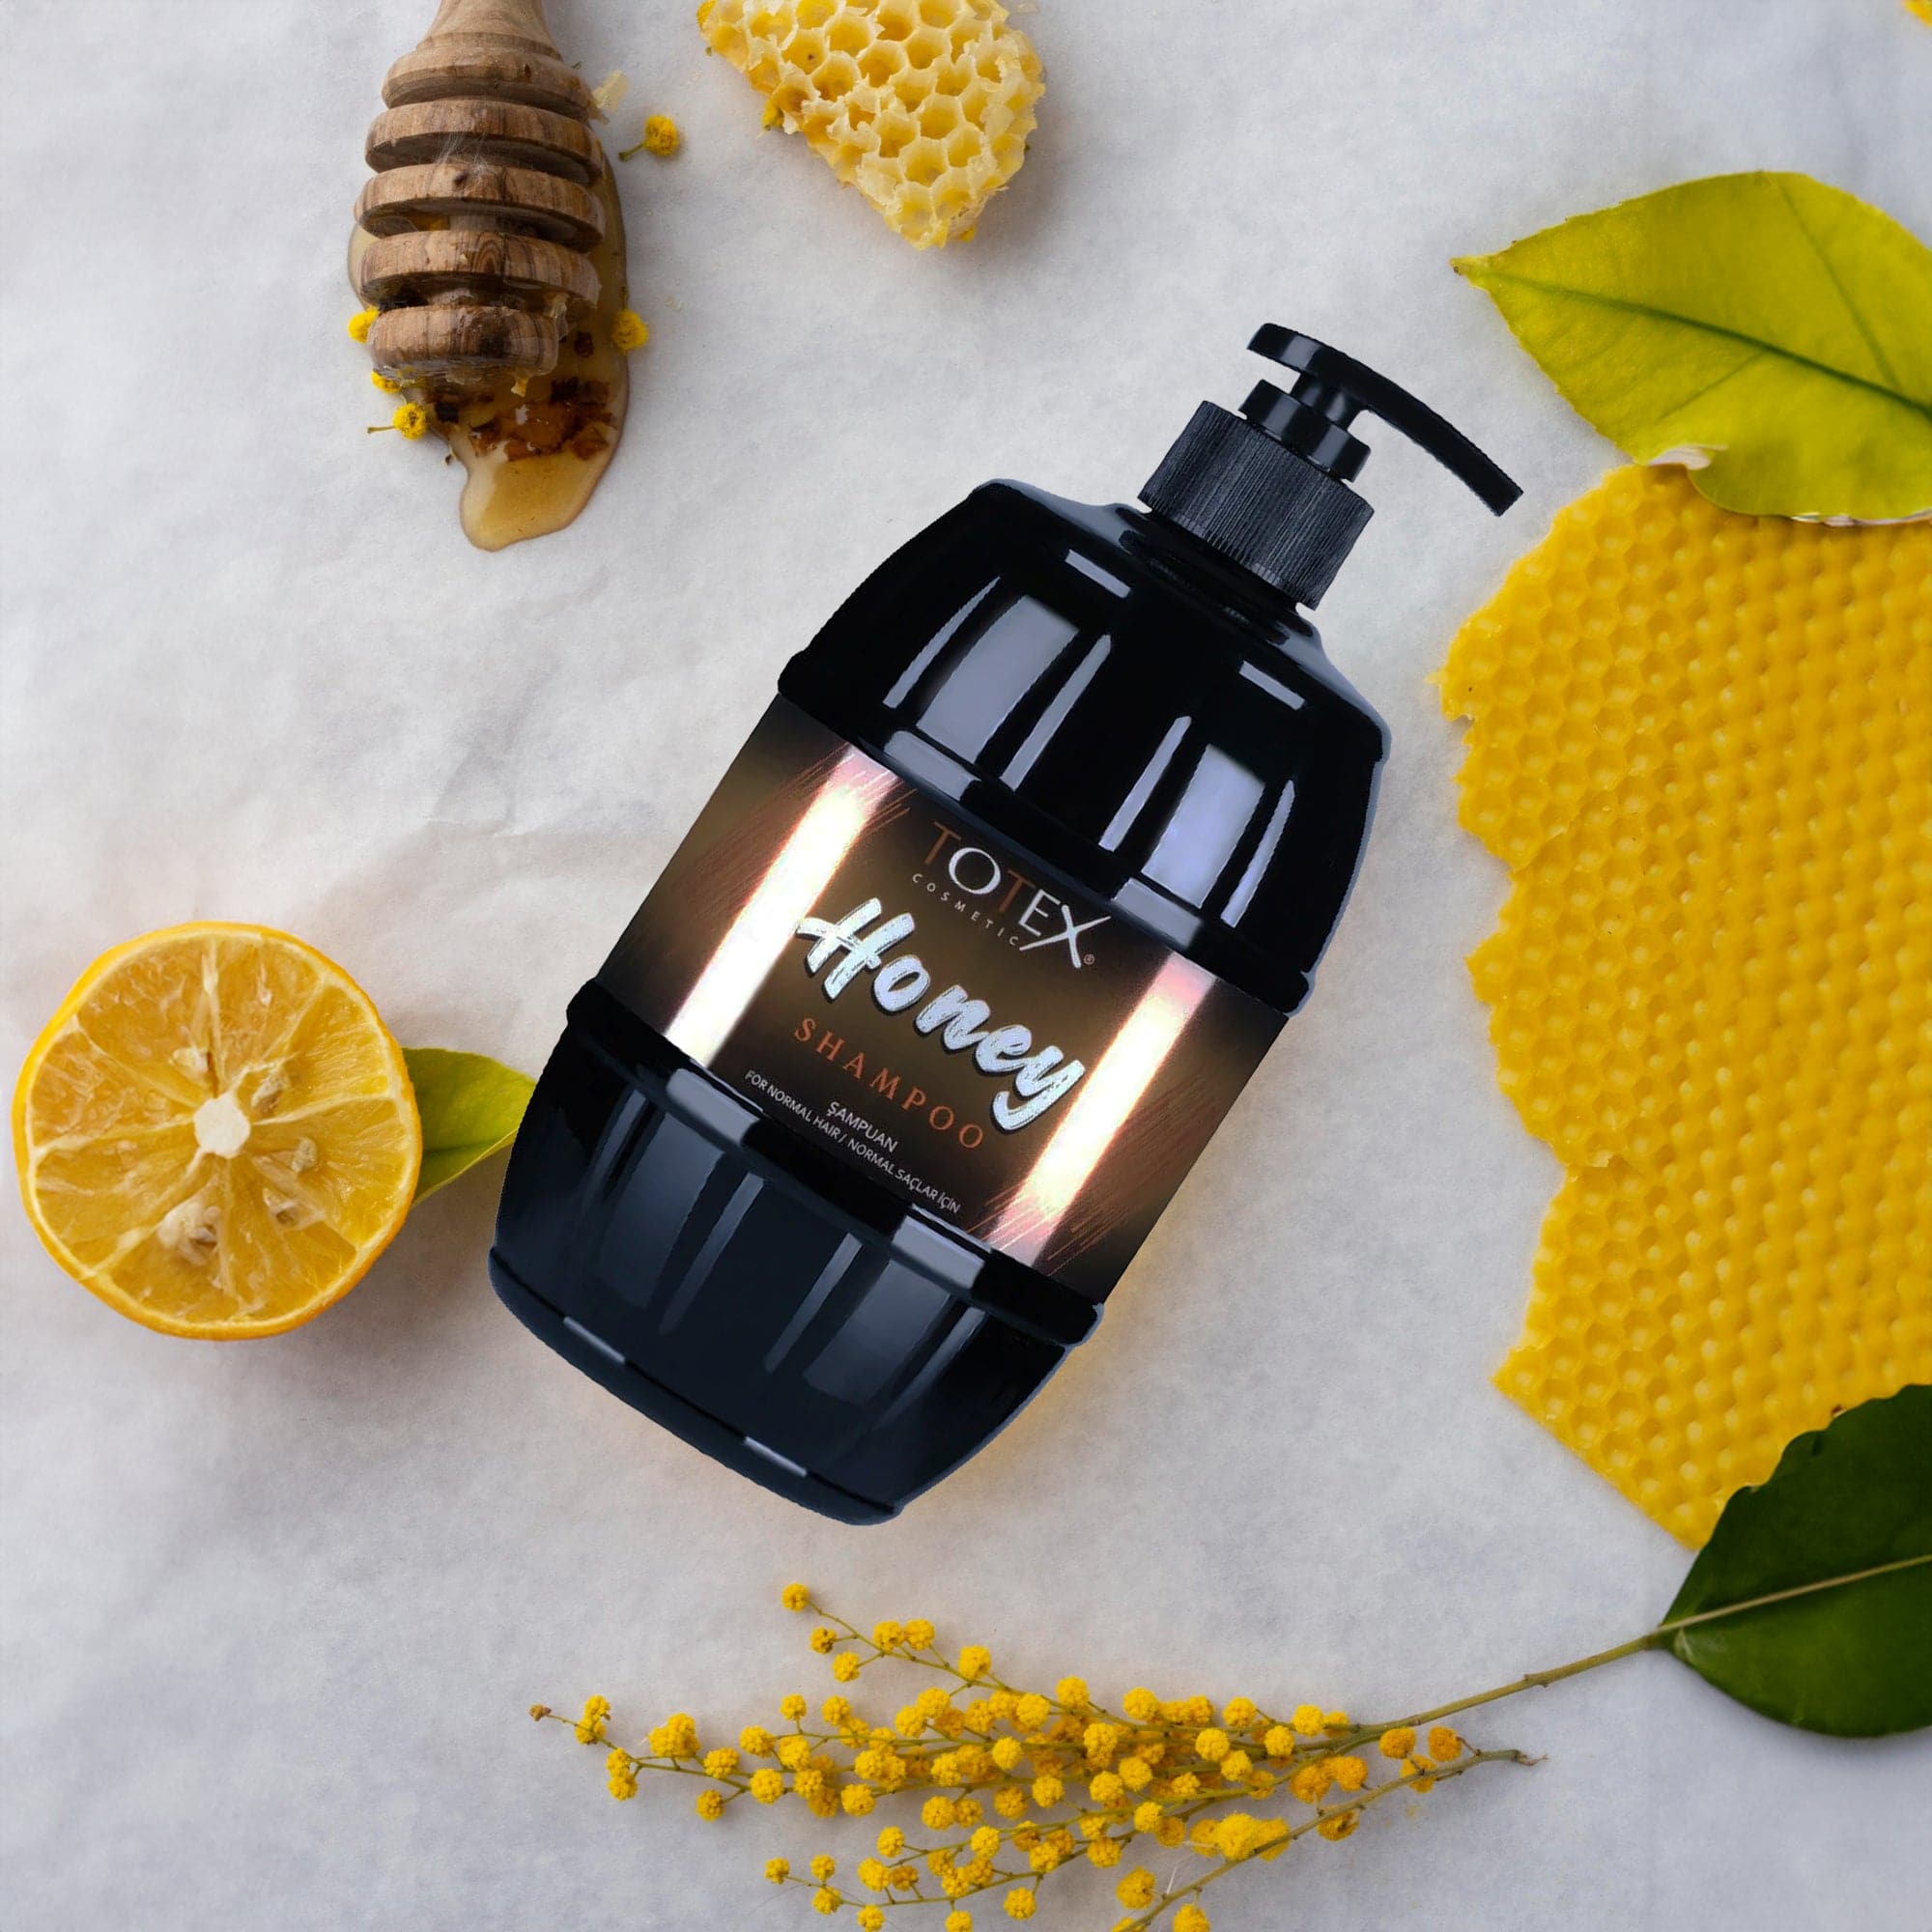 Totex - Shampoo Honey 750ml